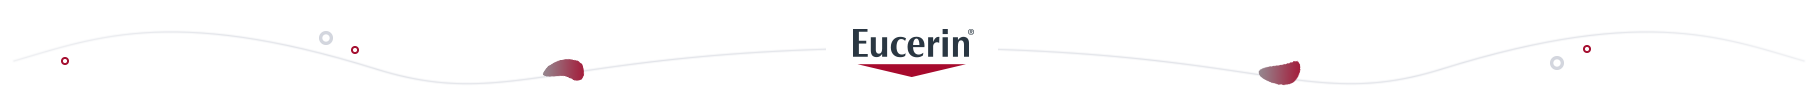 eucerin